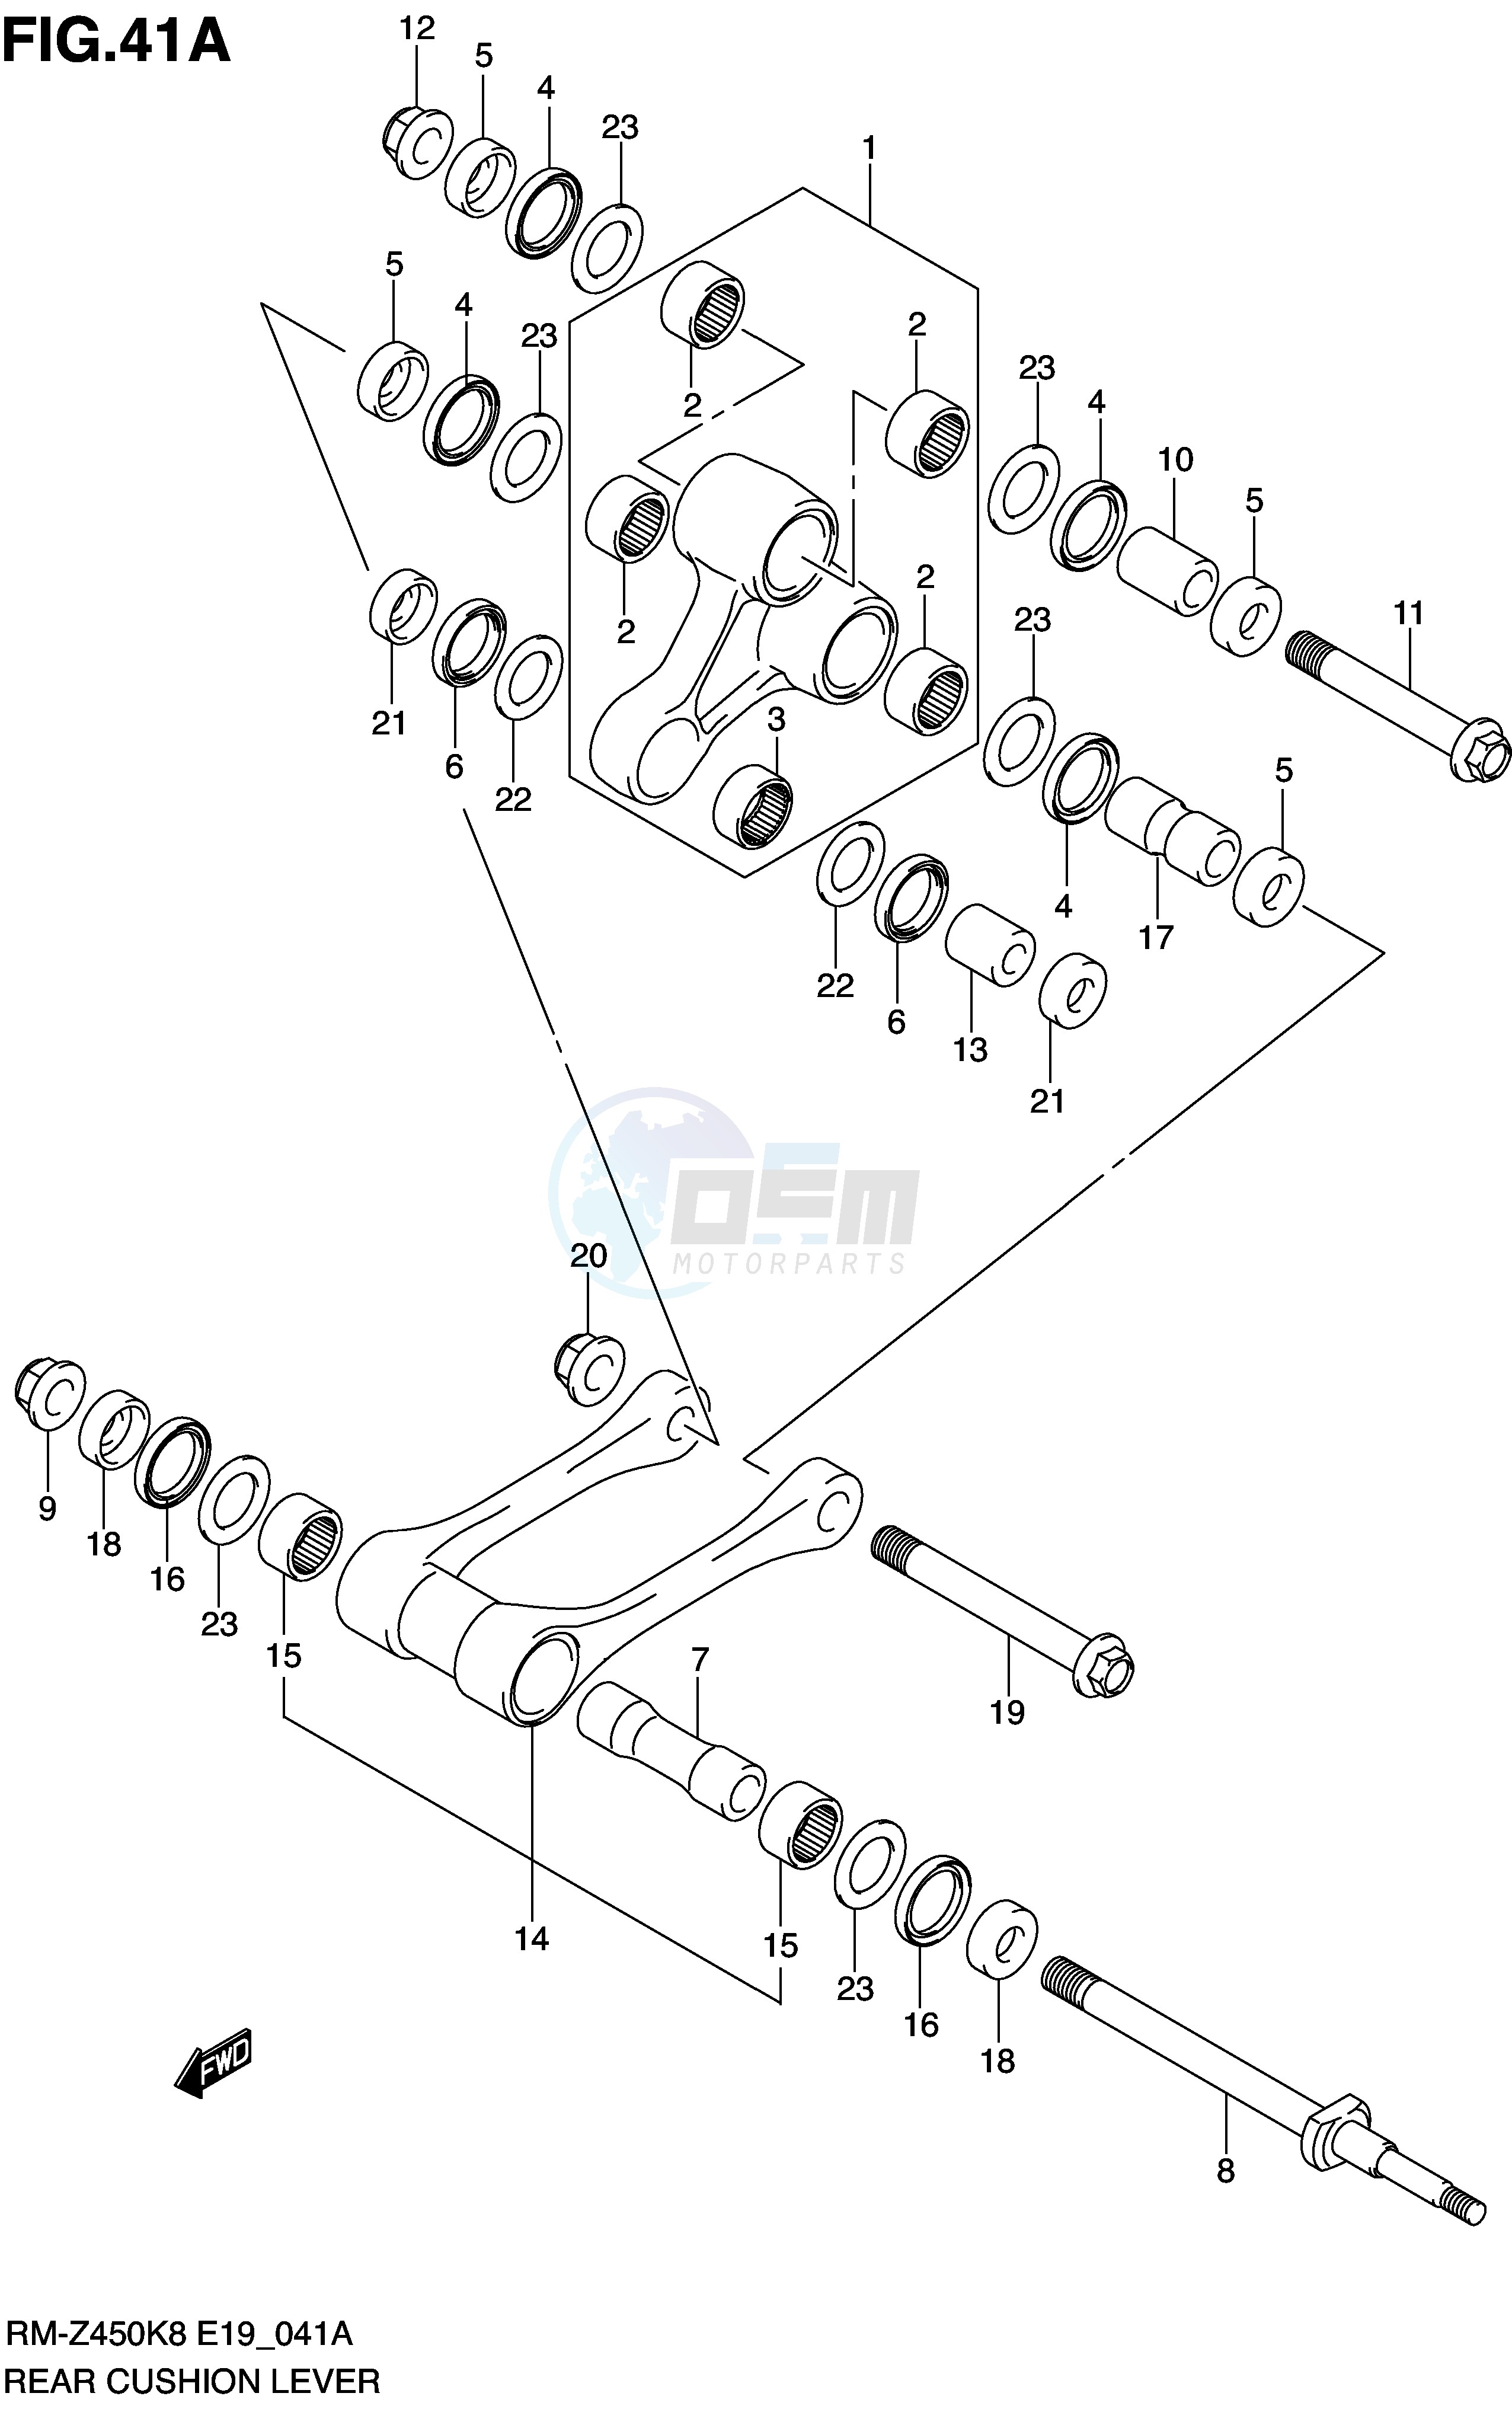 REAR CUSHION LEVER (RM-Z450L0 L1) blueprint